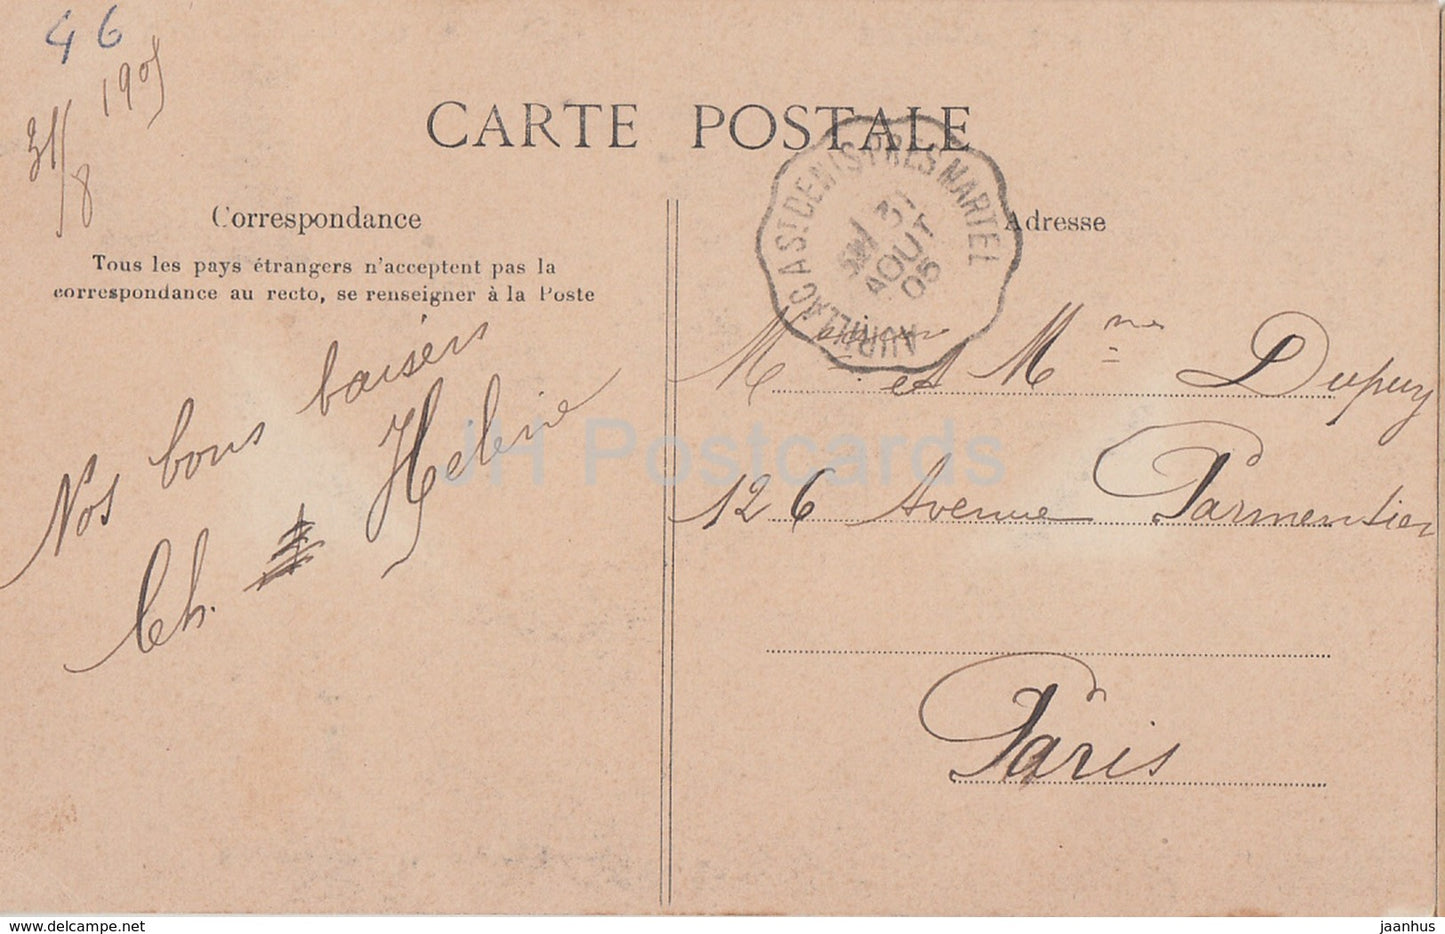 Le Lot Illustre - Le Chateau D'Aynac - castle - 3 - old postcard - 1905 - France - used